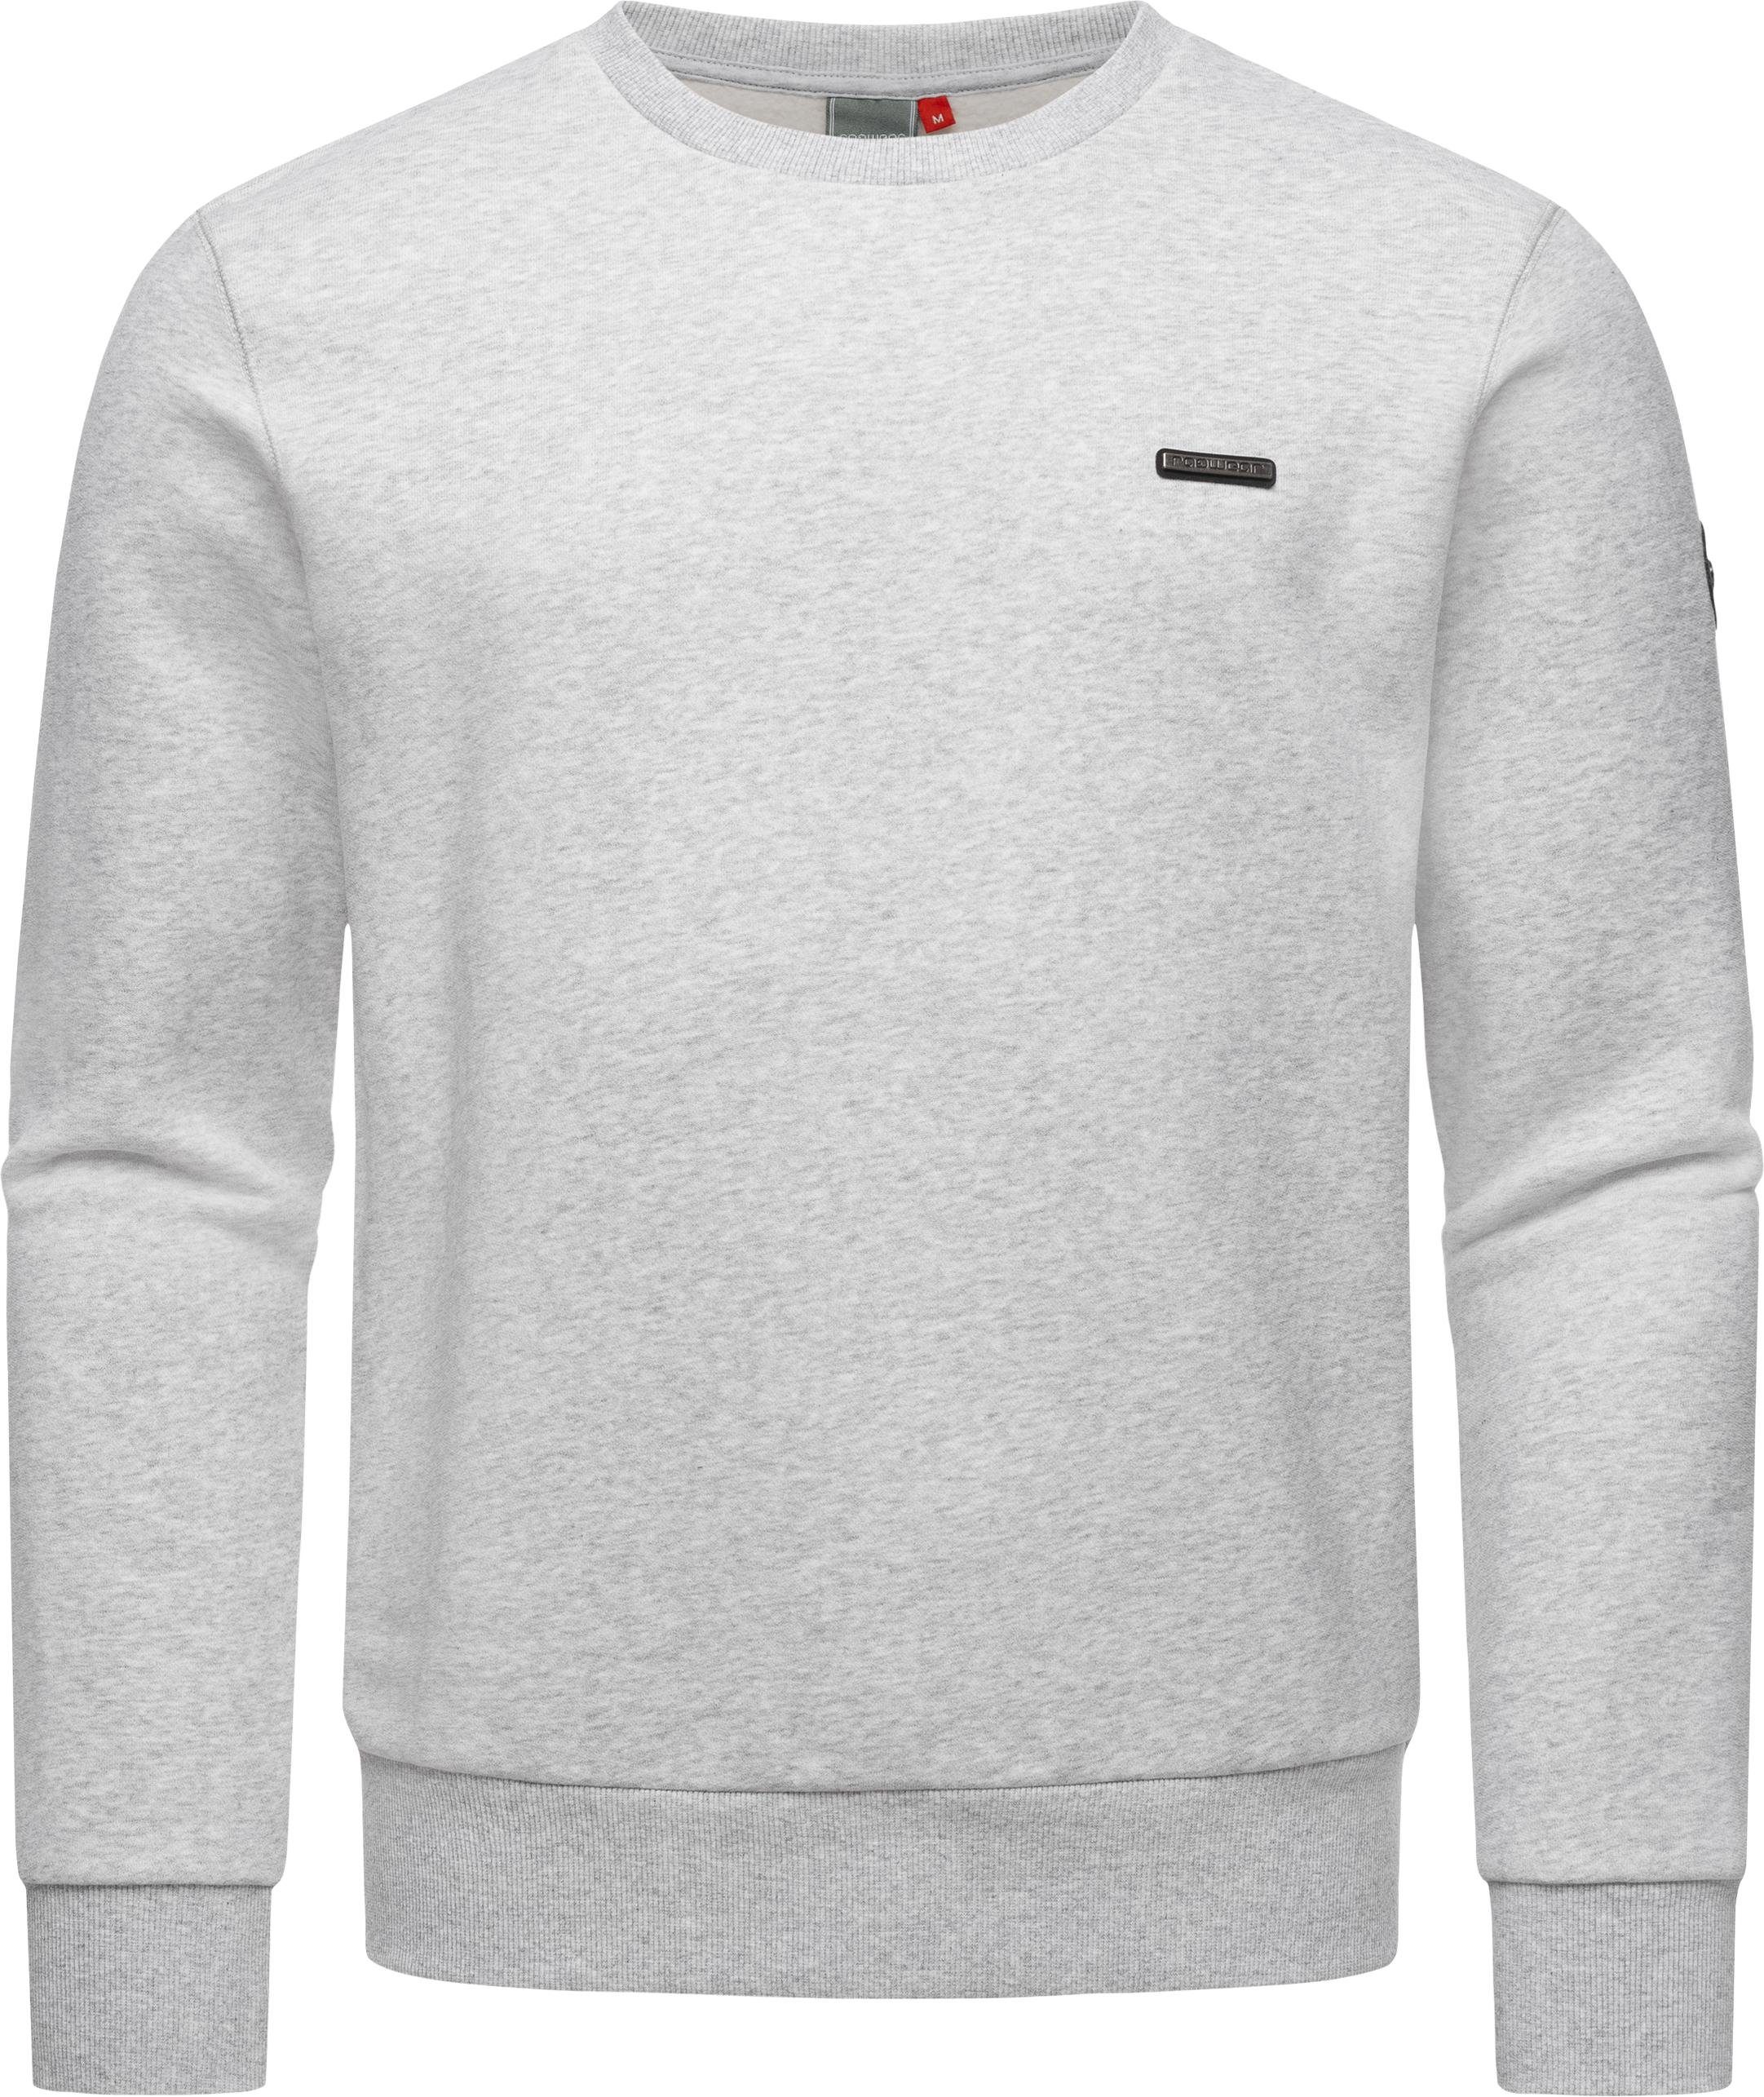 Ragwear Sweater Indie Cooler Basic Herren Pullover hellgrau